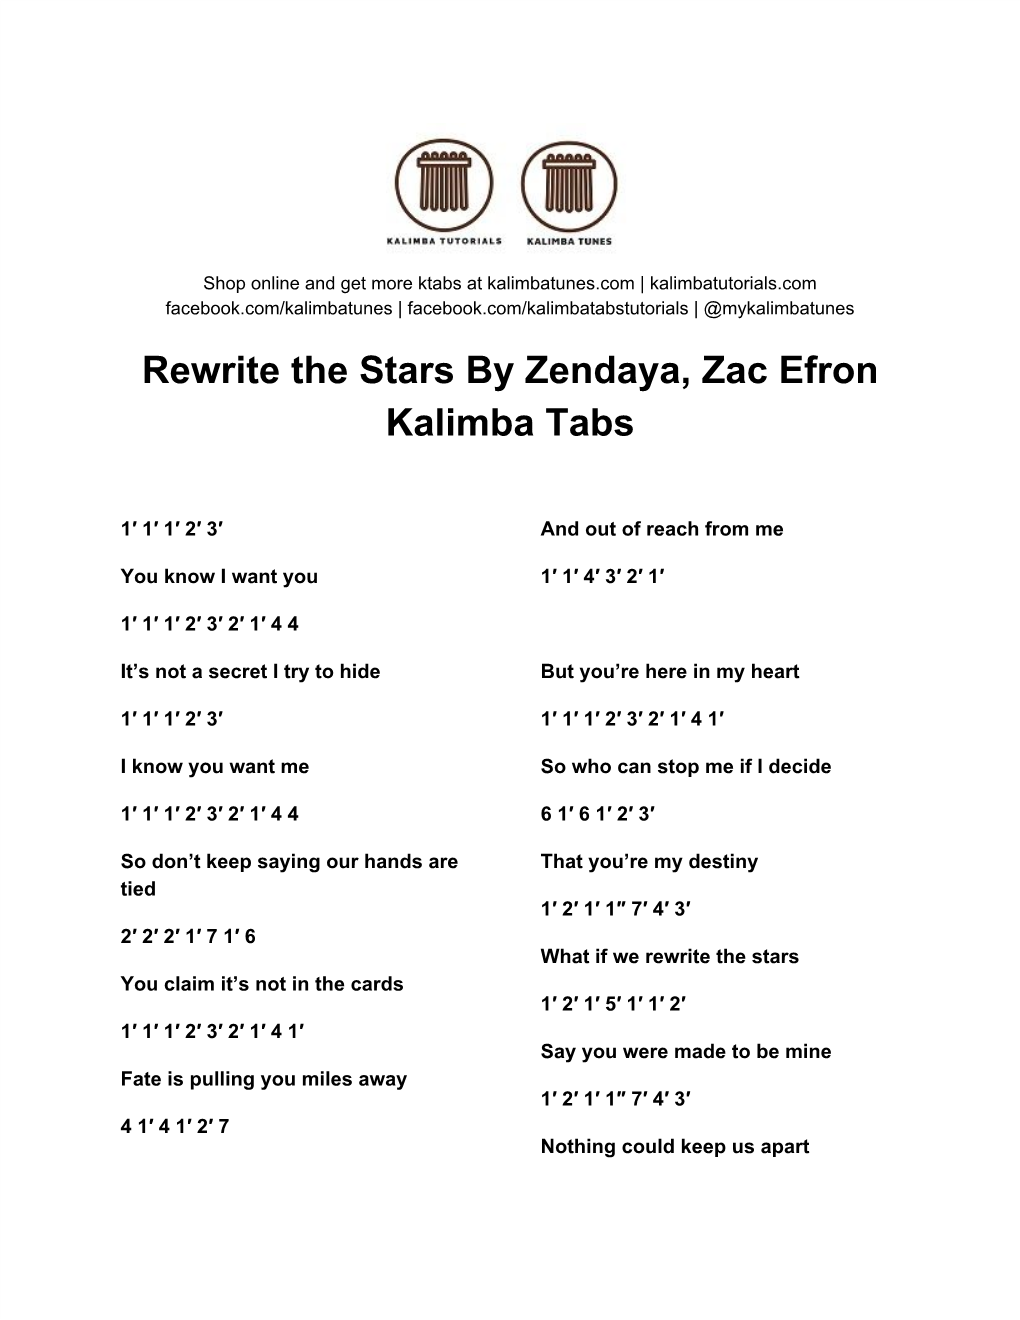 Rewrite the Stars by Zendaya, Zac Efron Kalimba Tabs